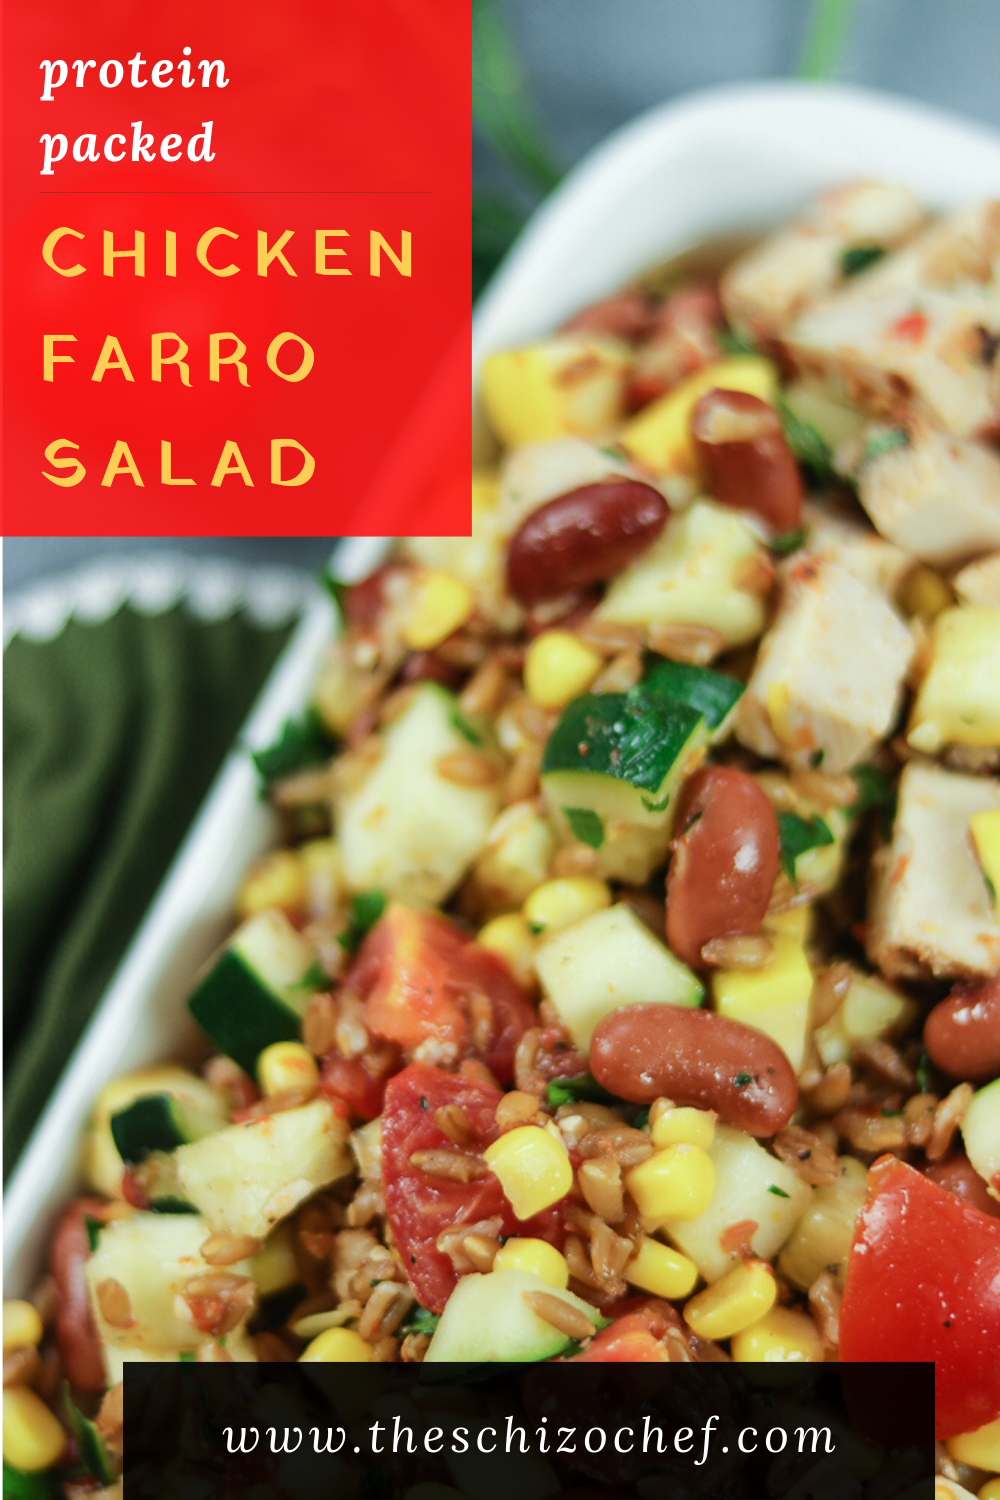 Italian Chicken Farro Salad